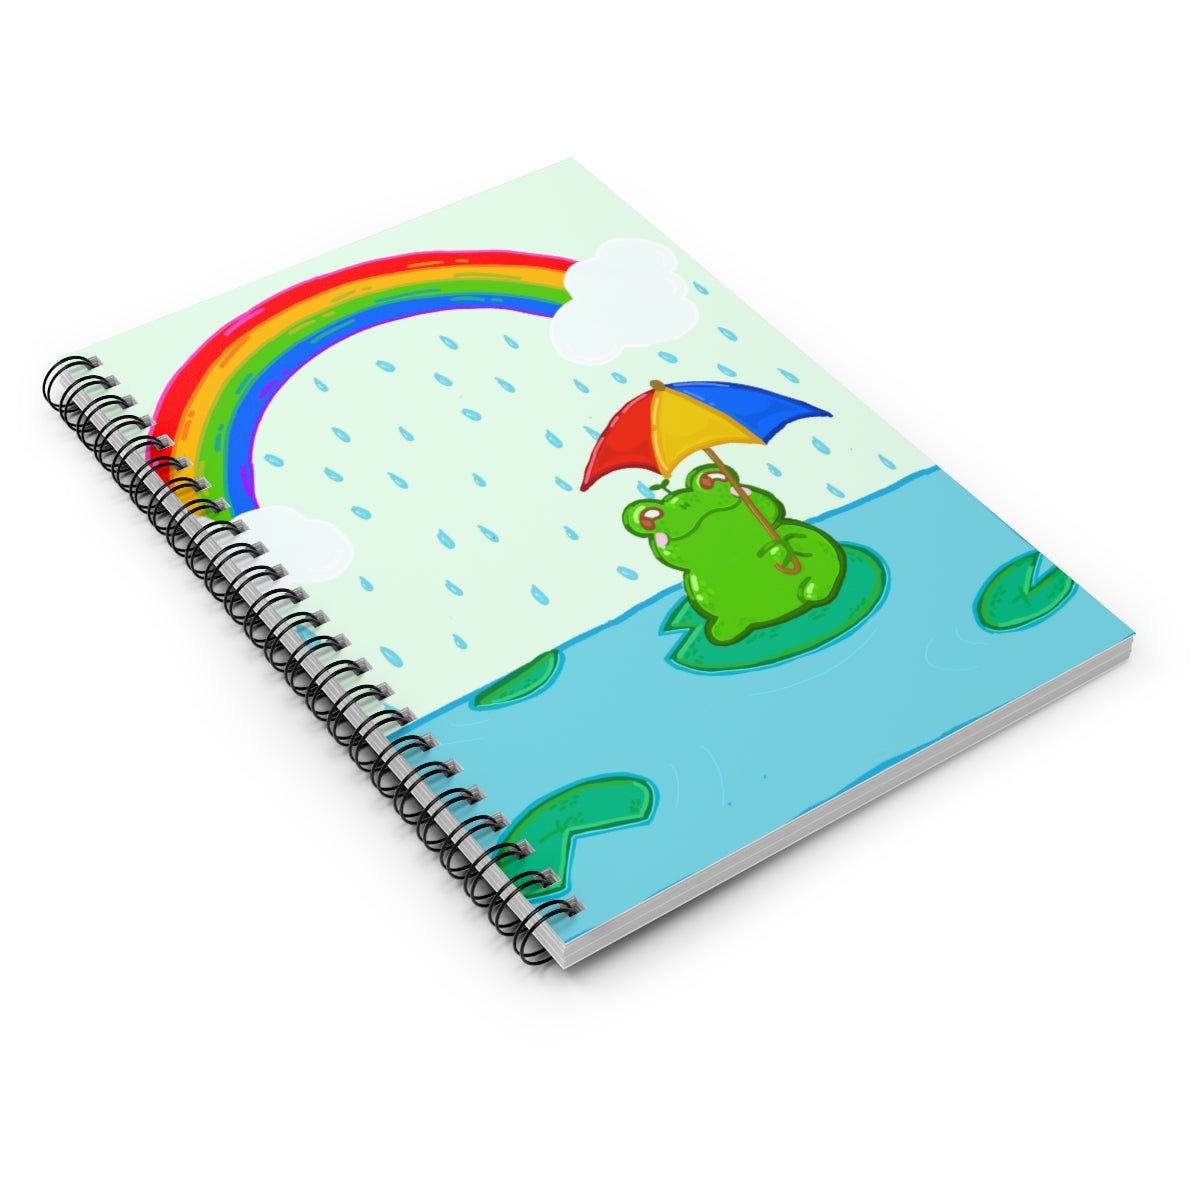 rainy days spiral ruled notebook